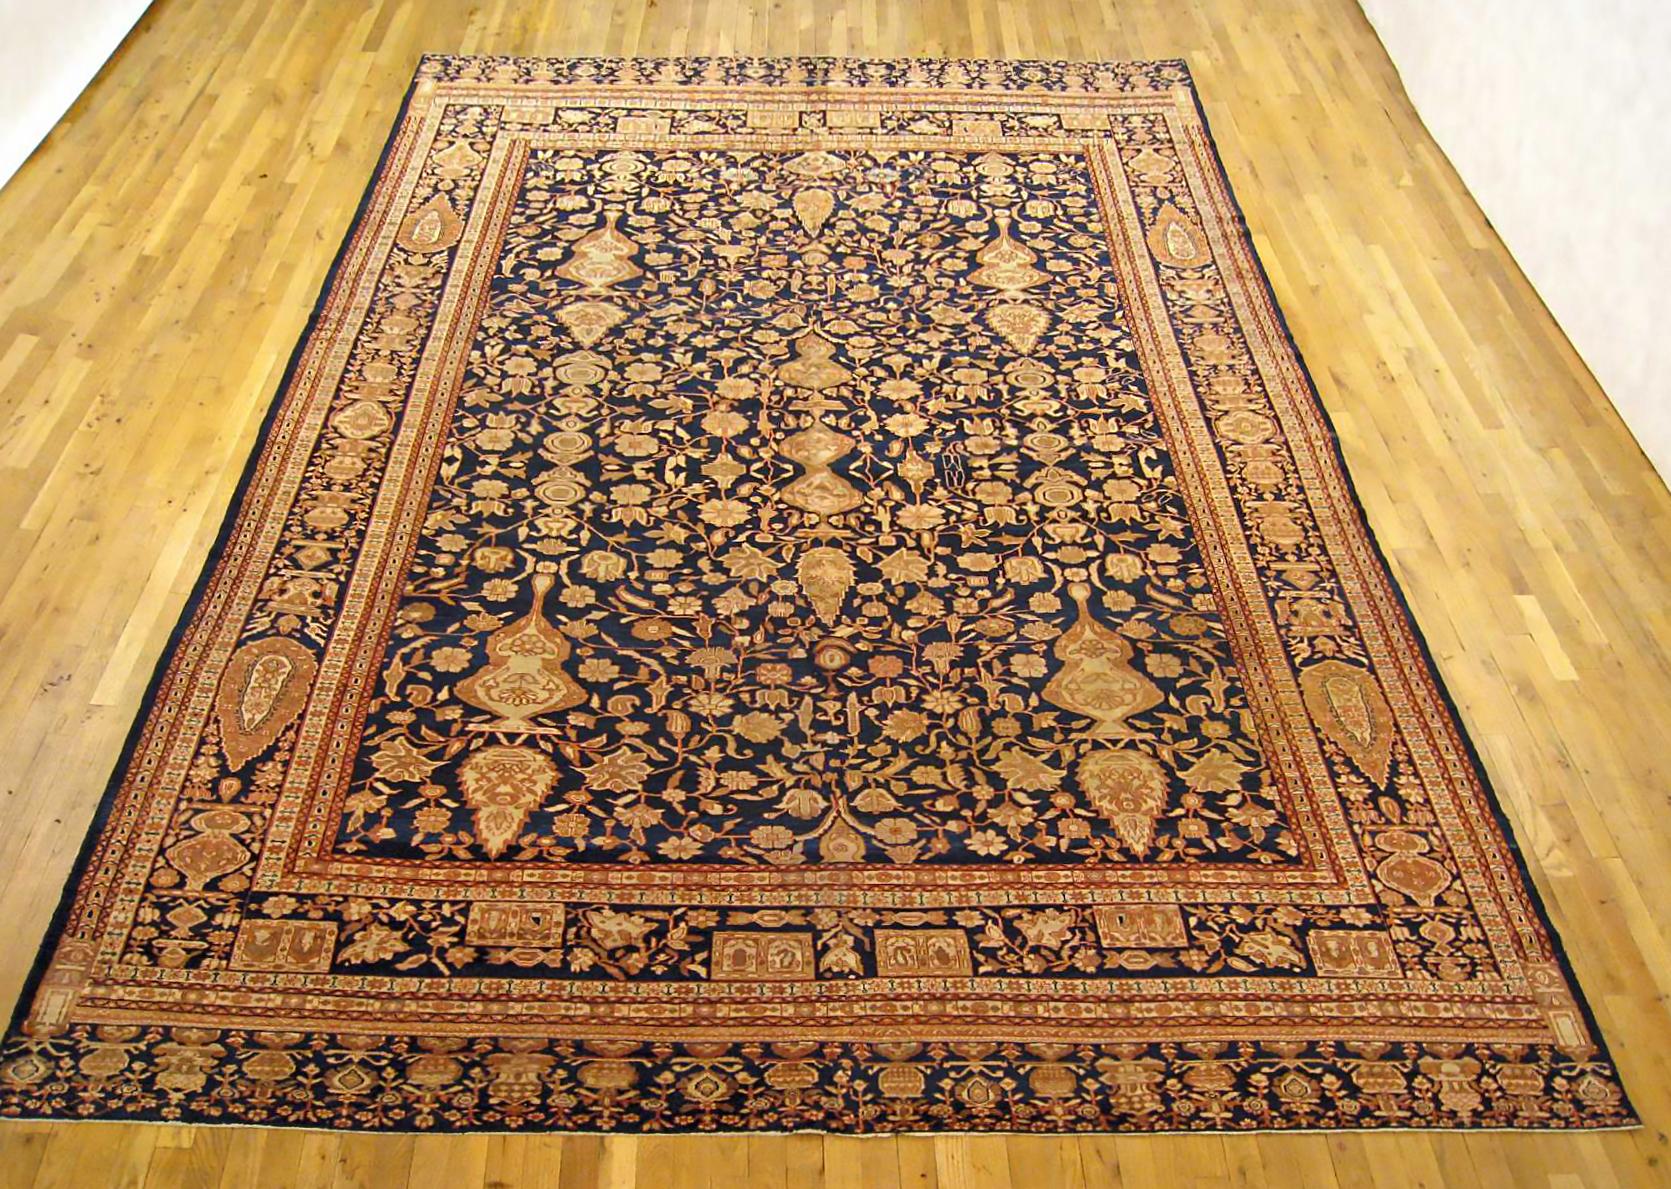 Antique Ferahan Sarouk oriental rug, circa 1900, room size.

An antique Ferahan Sarouk oriental rug, size 12' 5